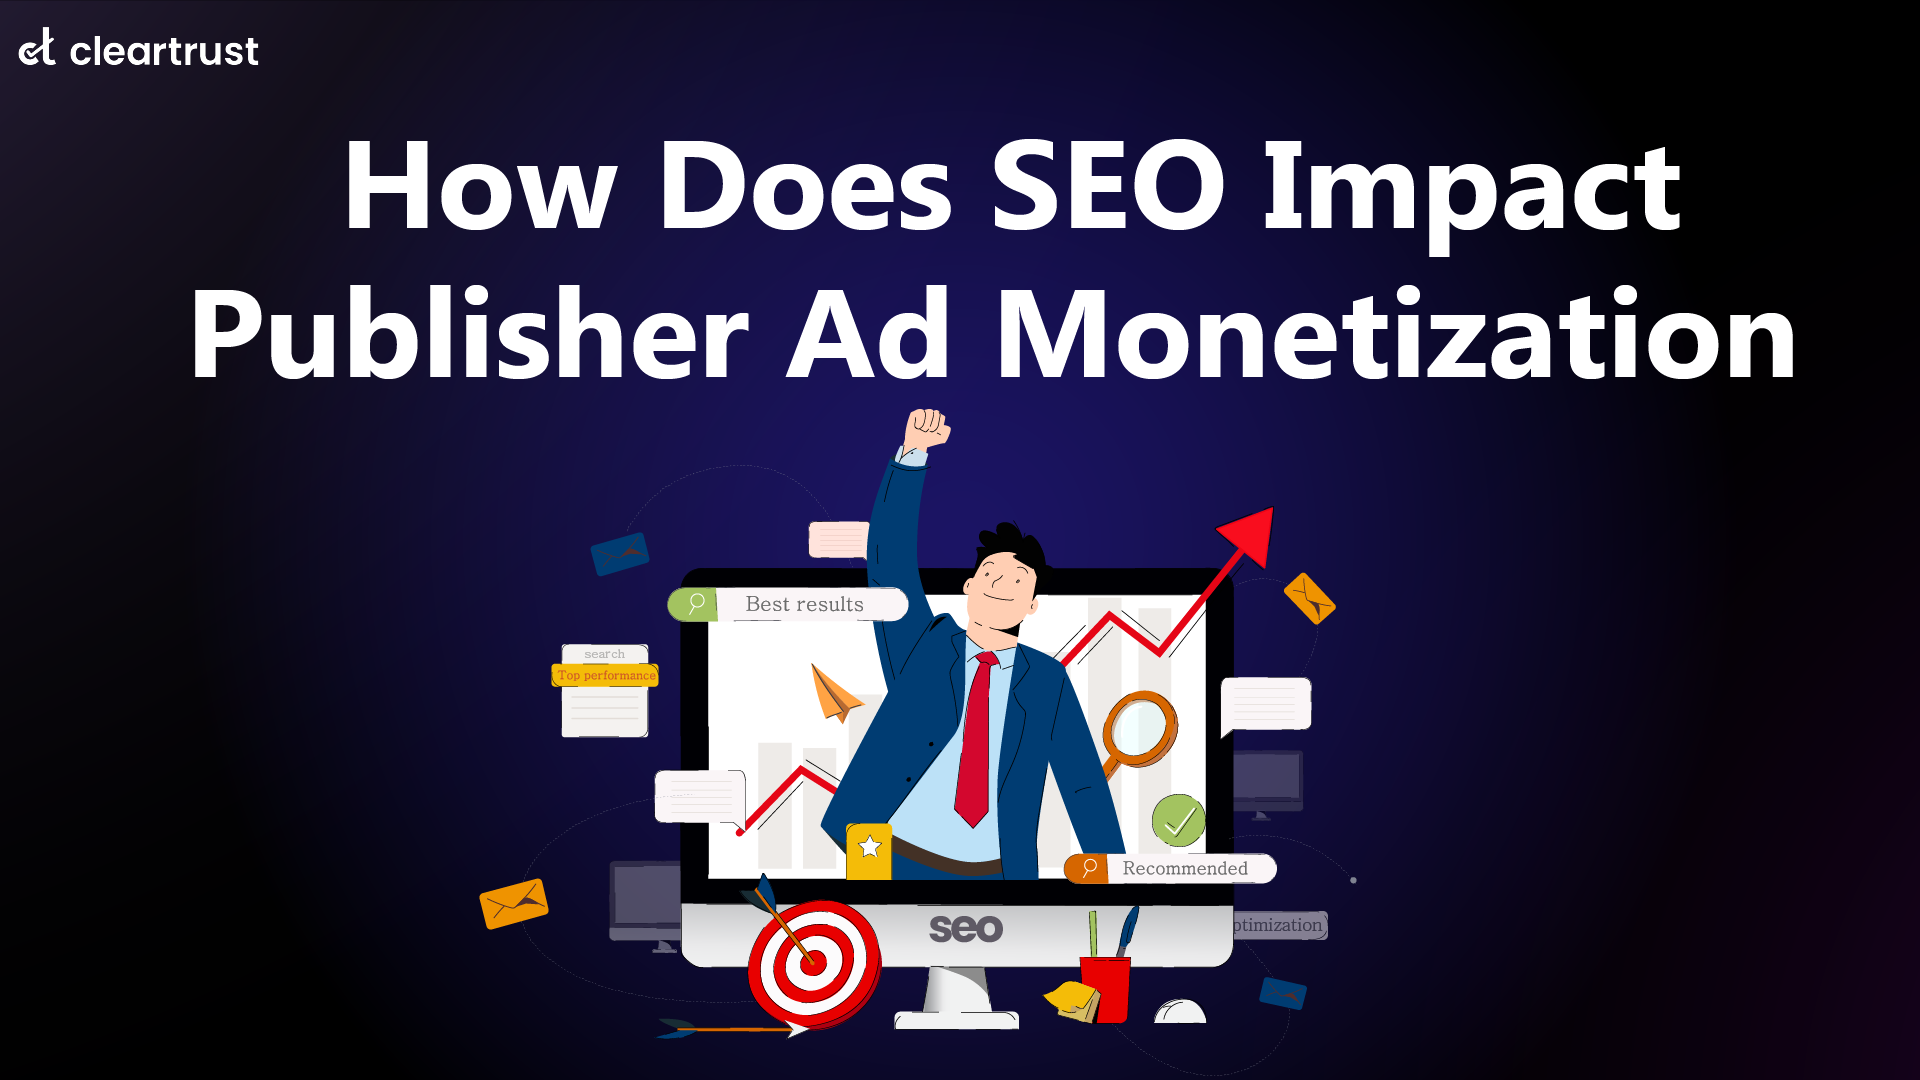 How does SEO impact publisher ad monetization?